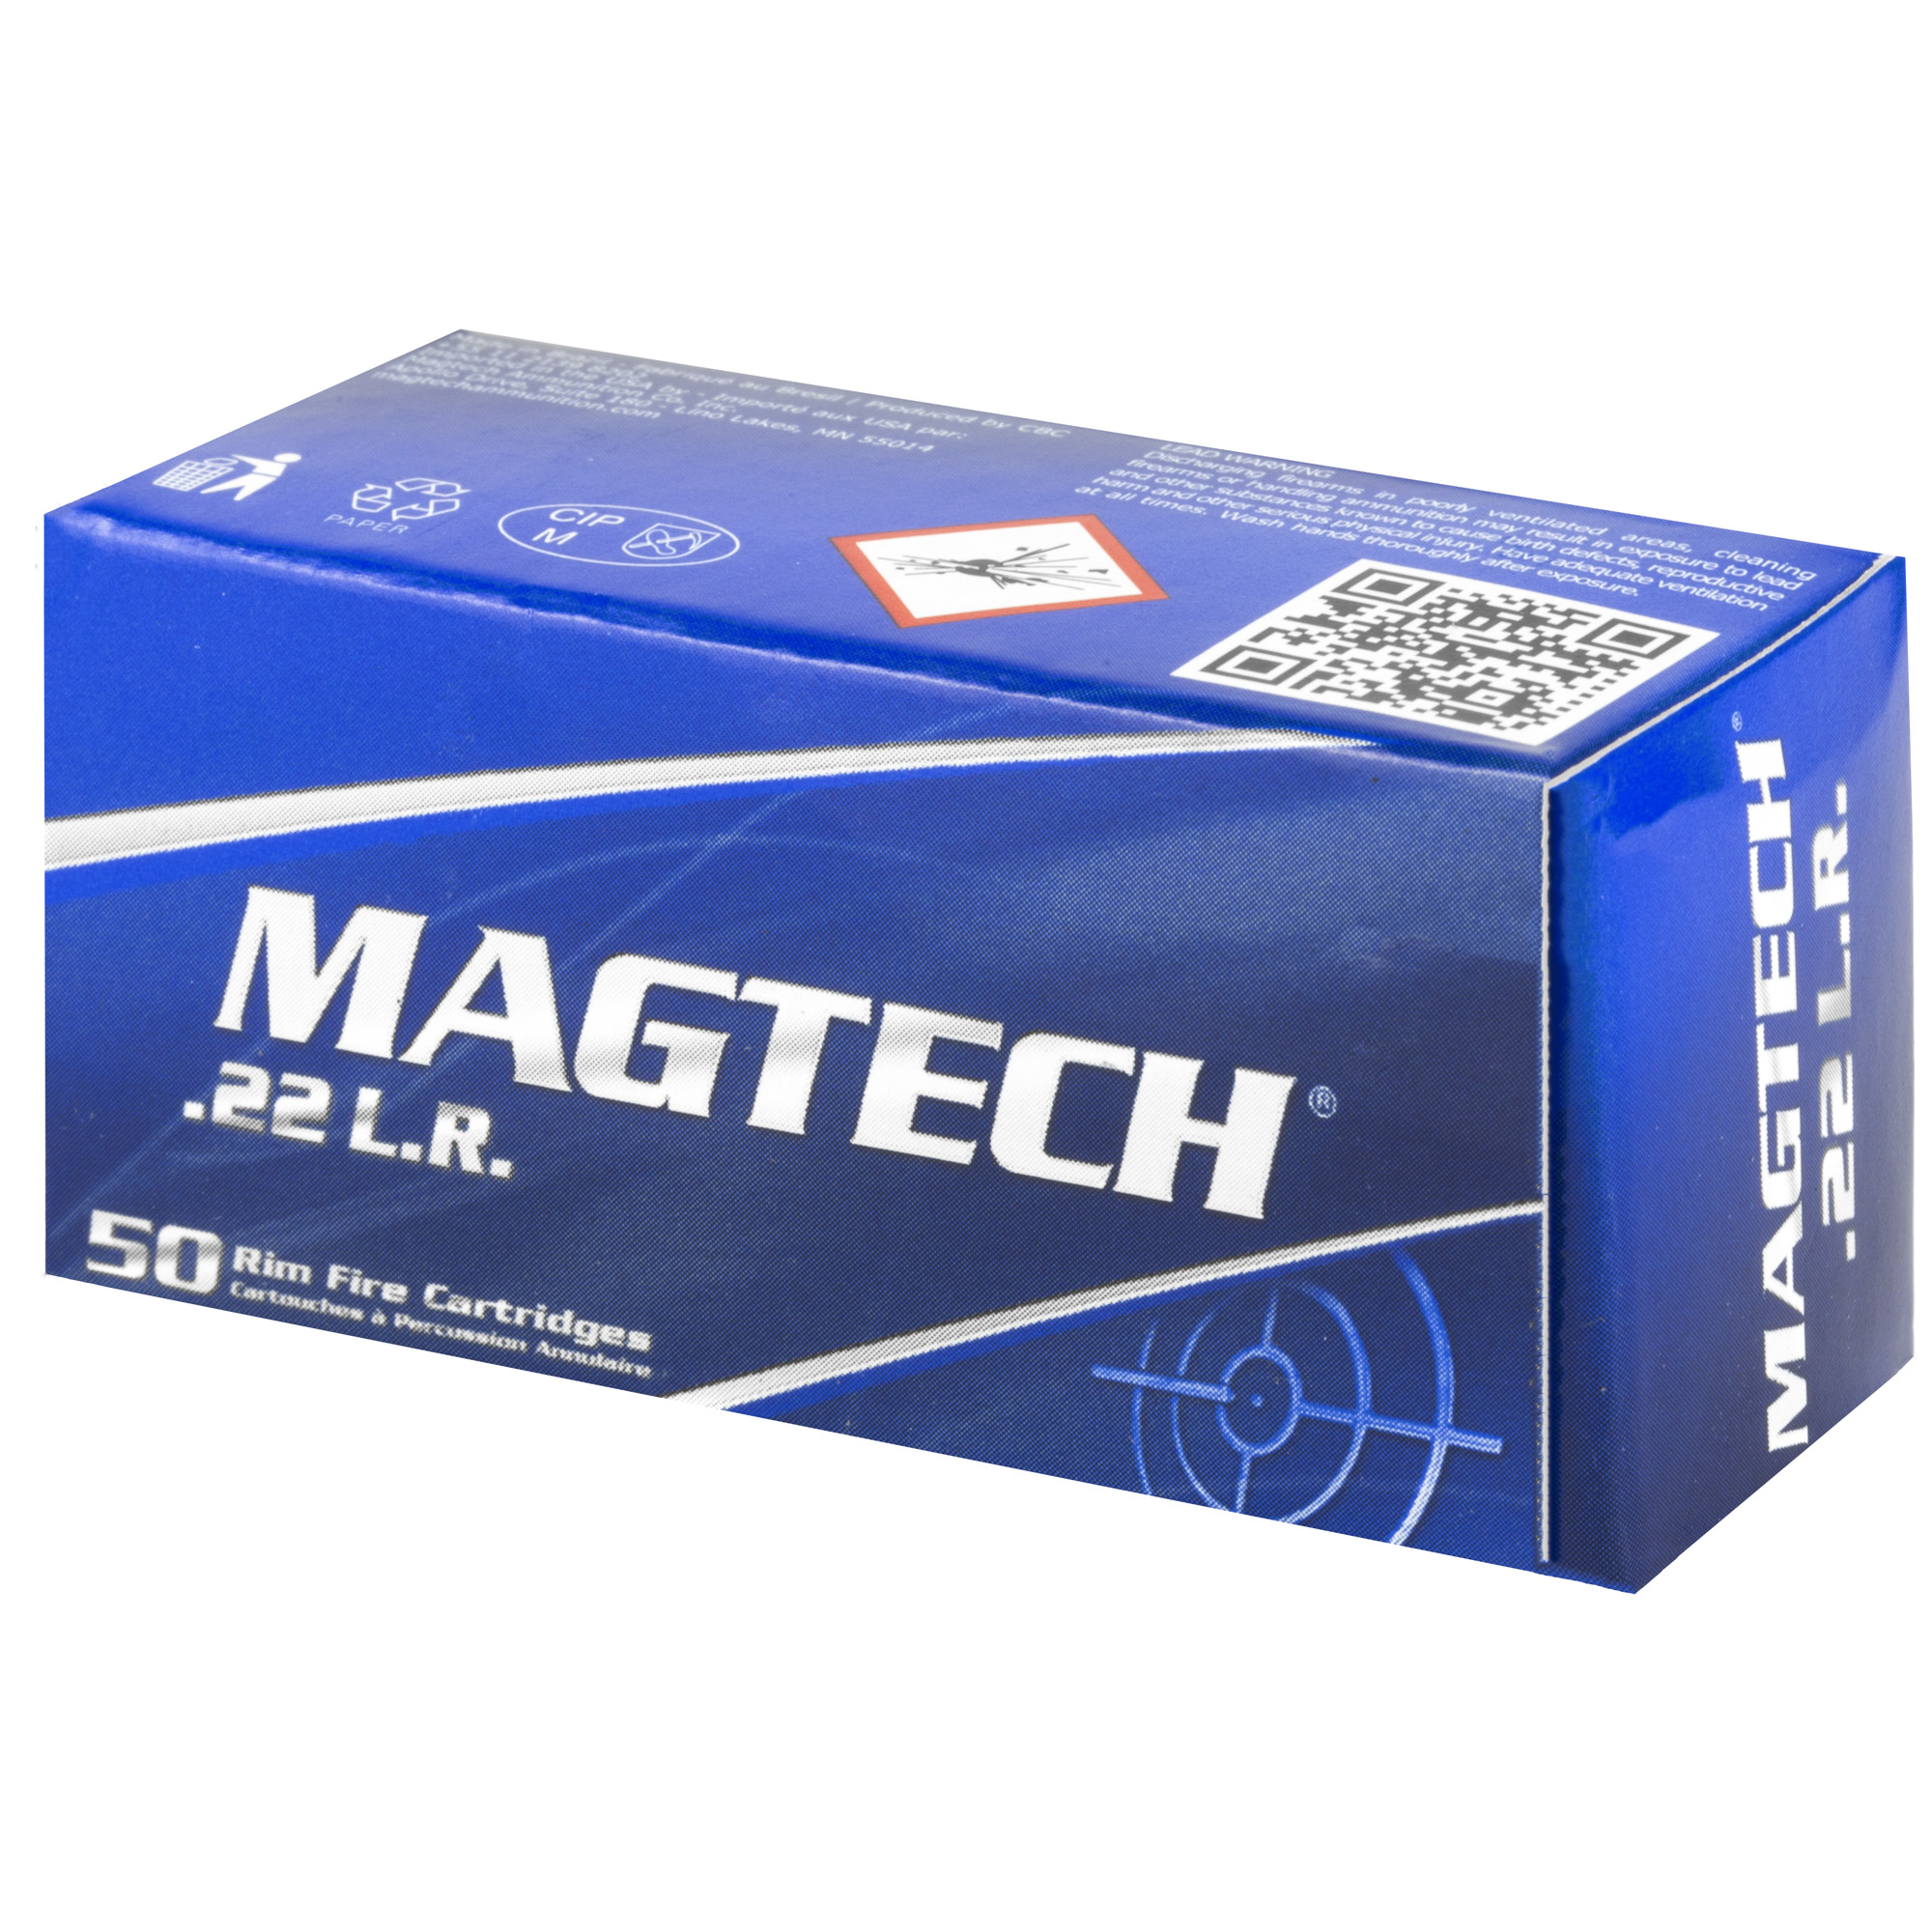 Magtech .22 LR Rimfire Ammunition 40 Grain 5000-Round (Case-Pack) Lead Round Nose 22b, UPC: 754908184903